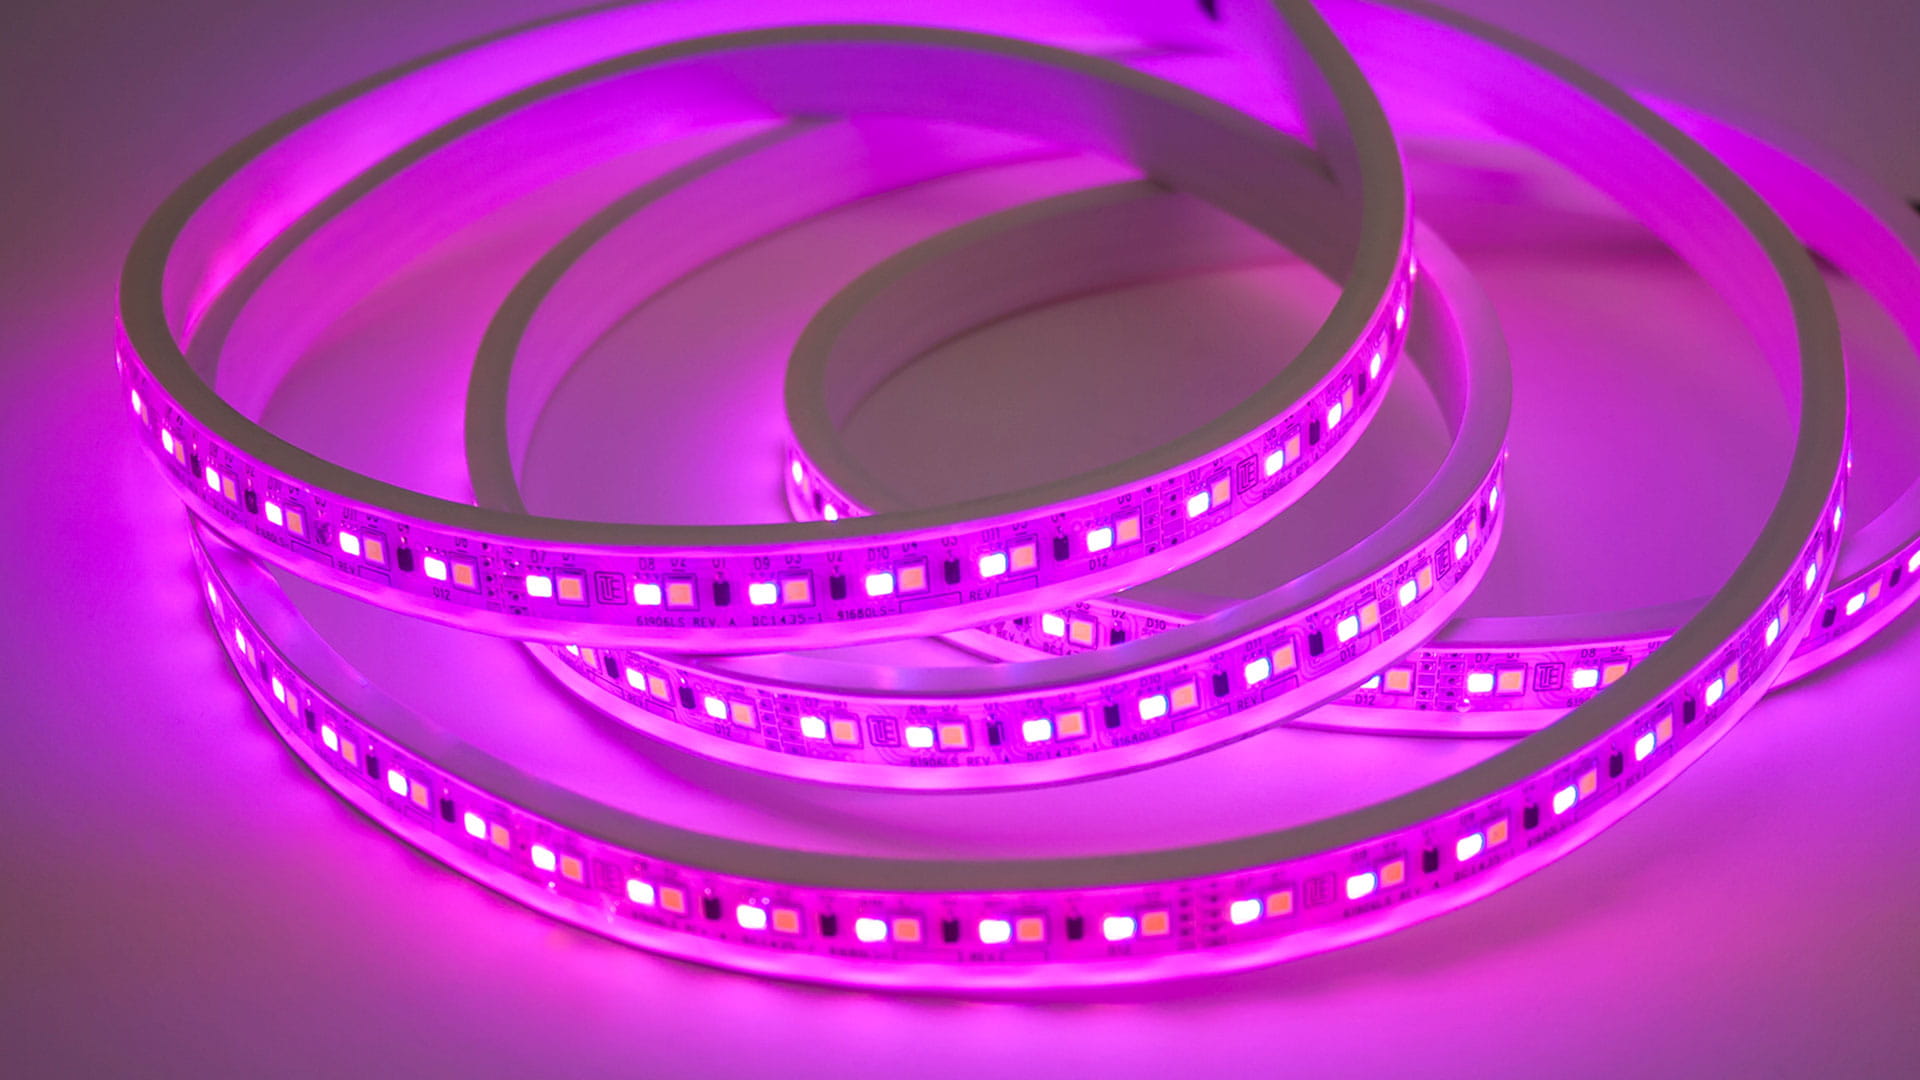 A strip of flexible, magenta-colored Viu lighting